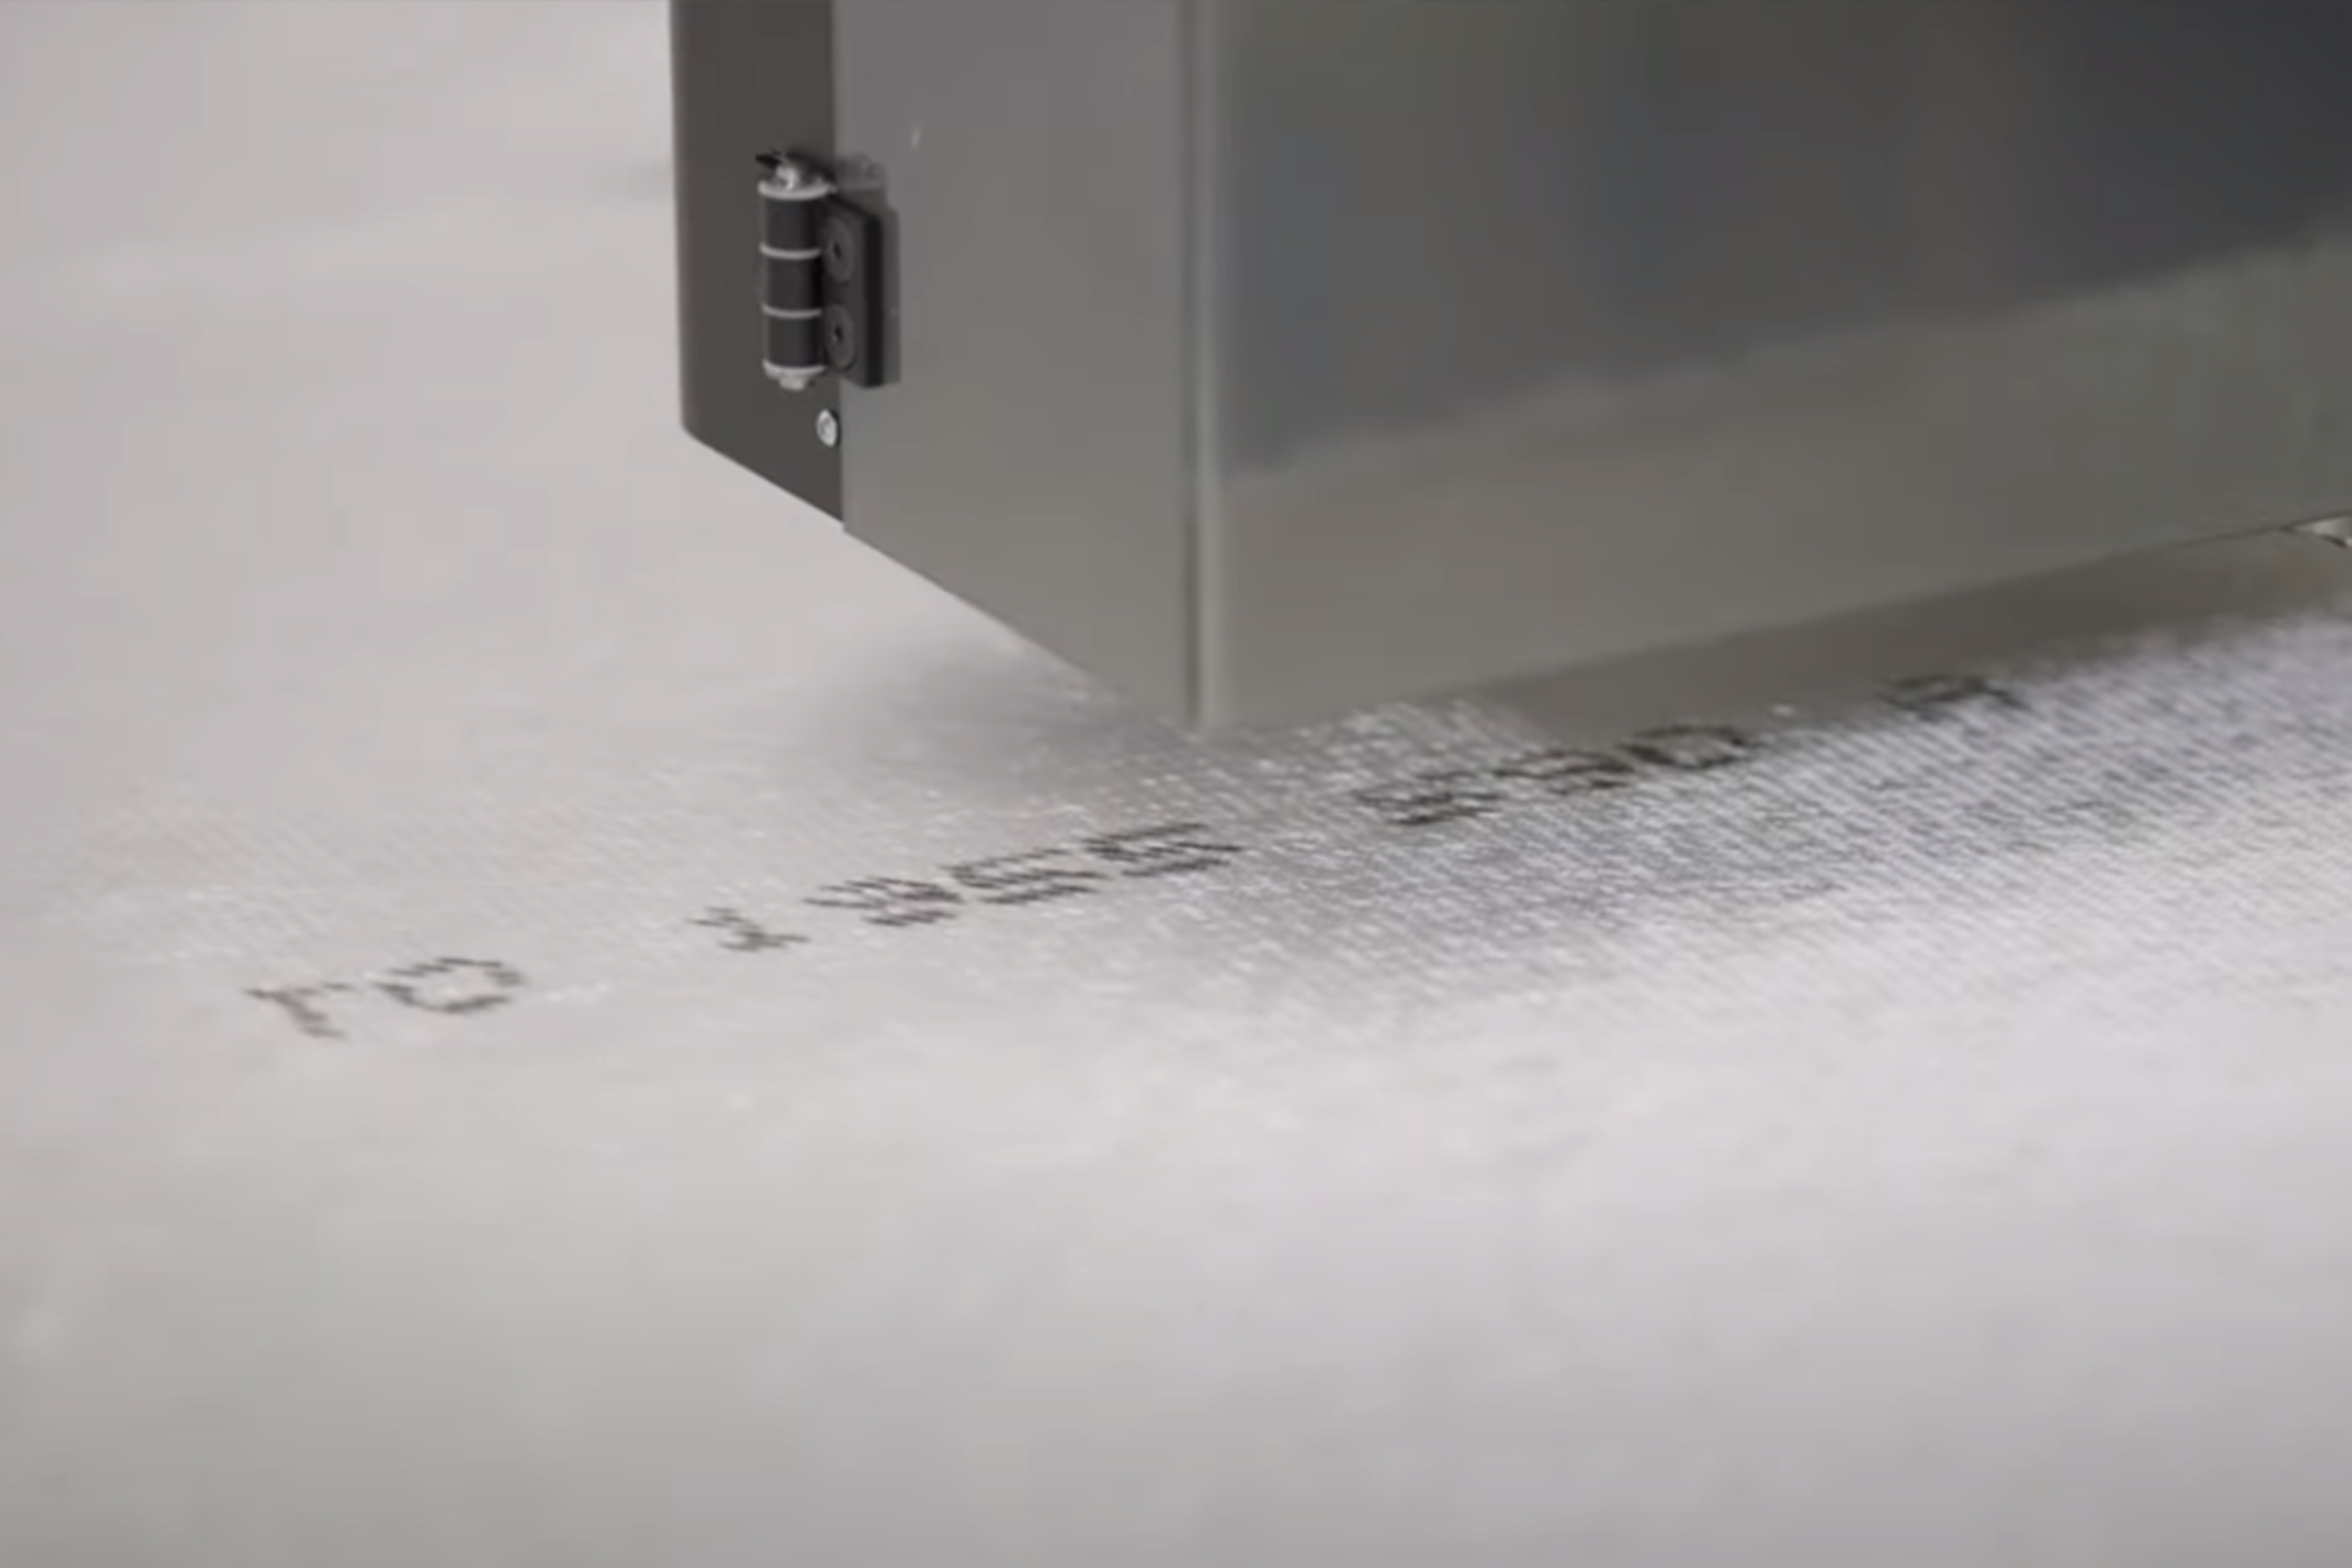 Closeup of JetPRO HRC continuous duty printer